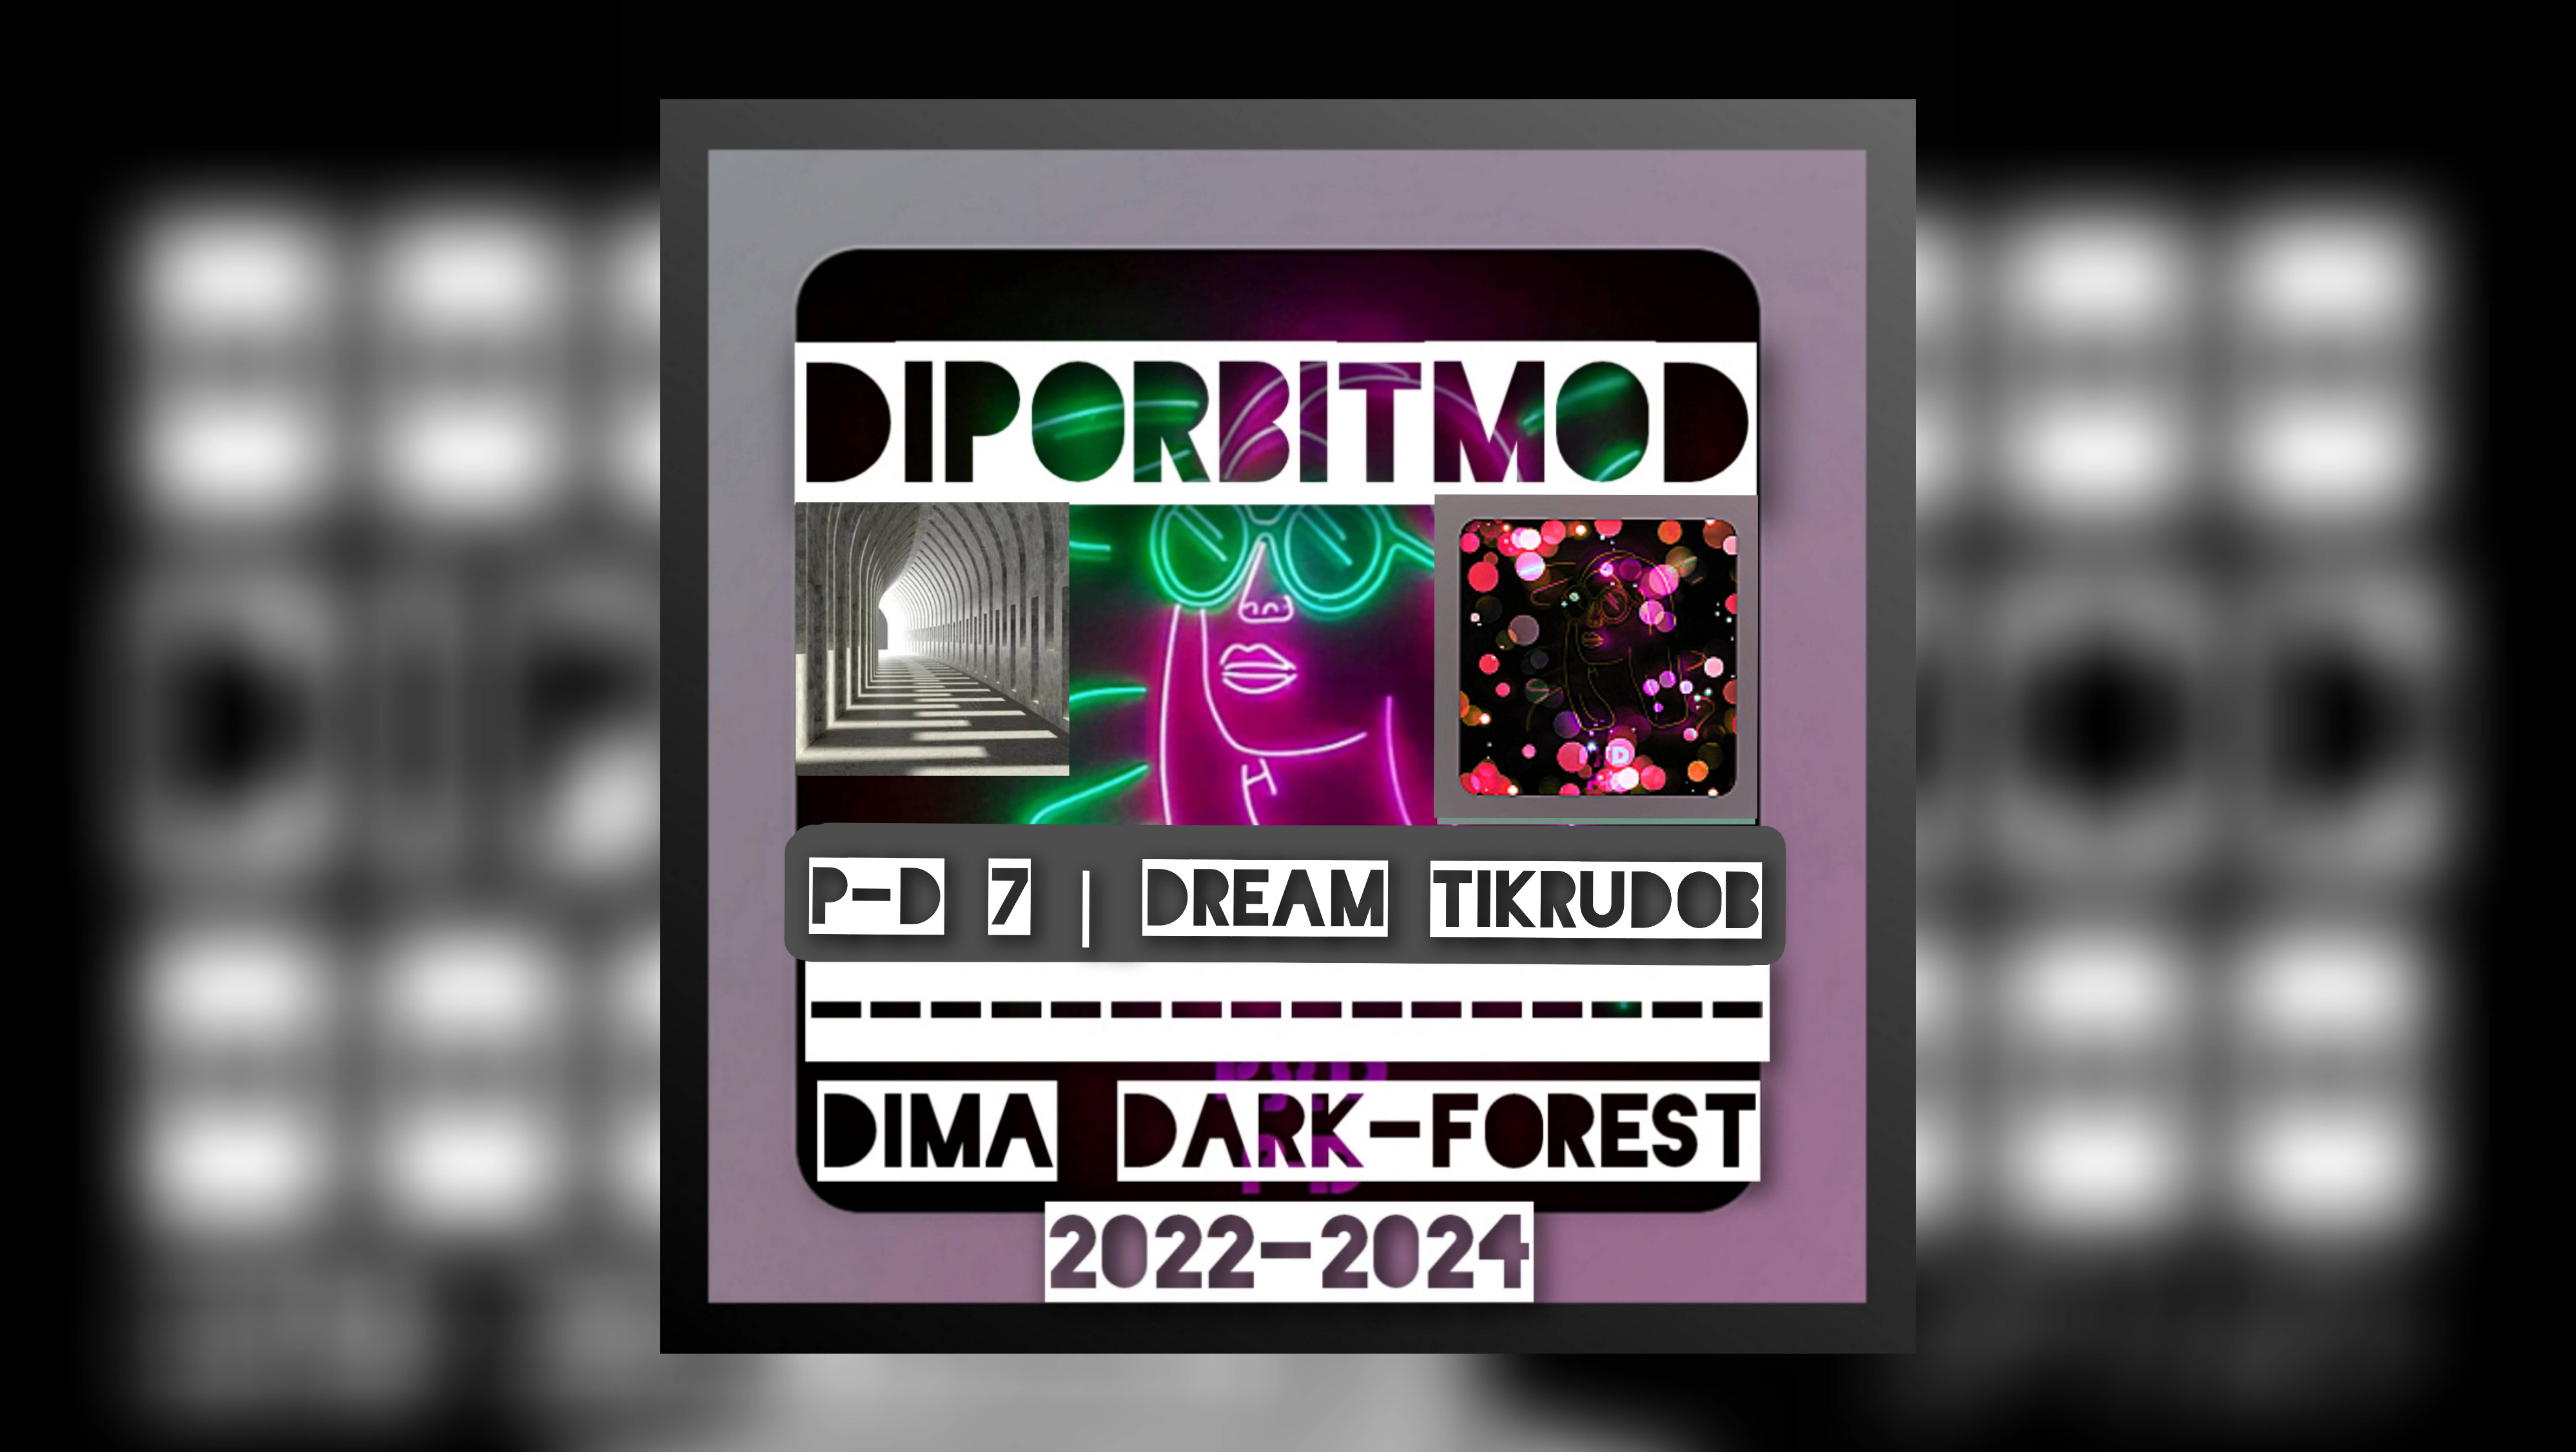 P-D 7 | Dream tikrudob